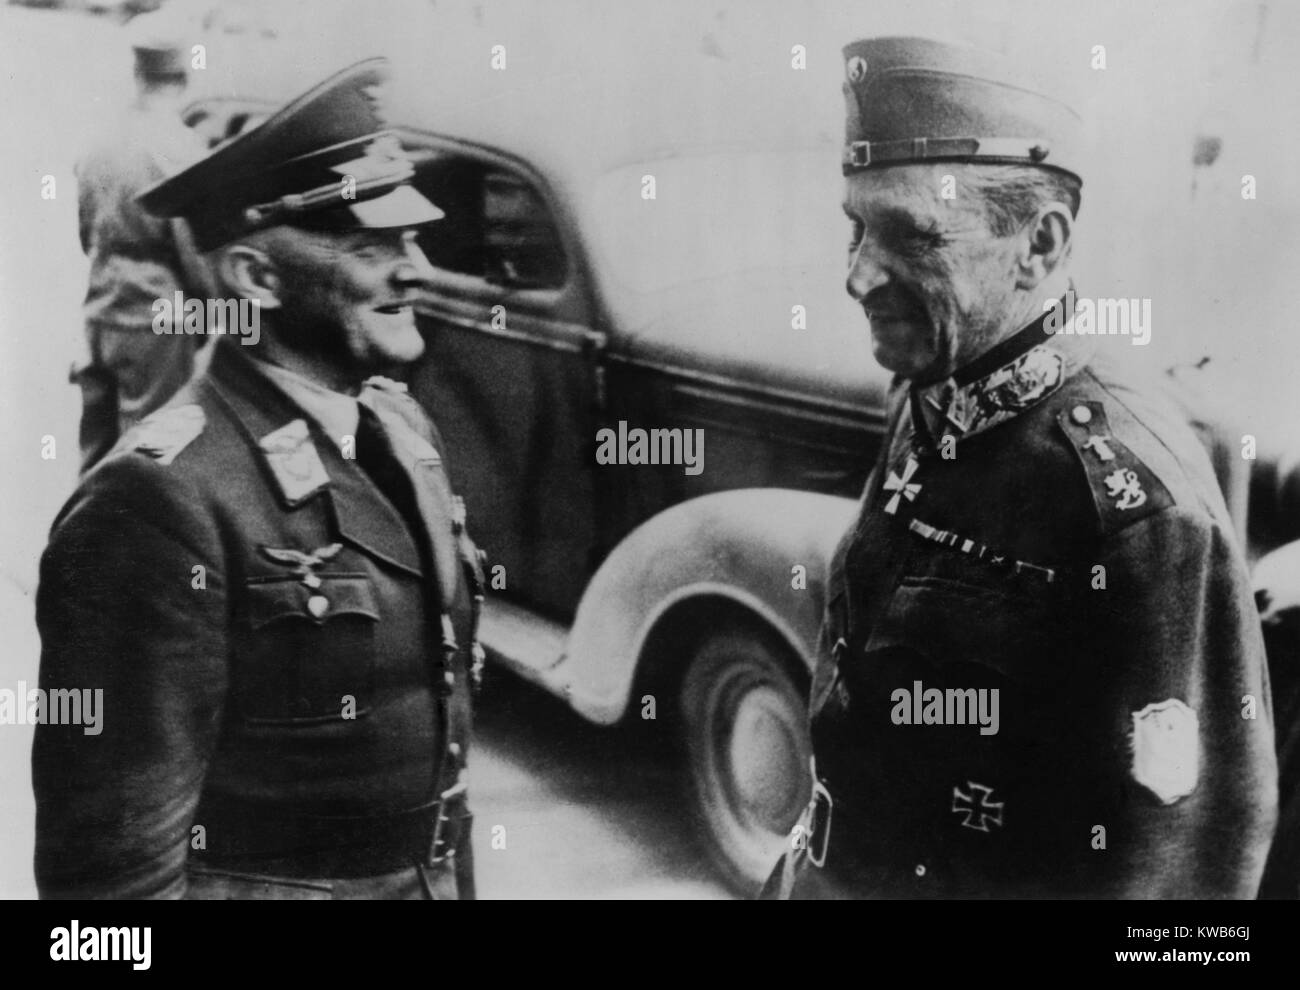 Finland's Marshal Mannerheim speaking with German air General Hans-Jurgen Stumpff, August 1941. Finland accepted German assistance during the 'Continuation War' (June 25, 1941- Sept. 19, 1944) against the Soviet Union(Russia). World War 2. (BSLOC 2014 8 151) Stock Photo